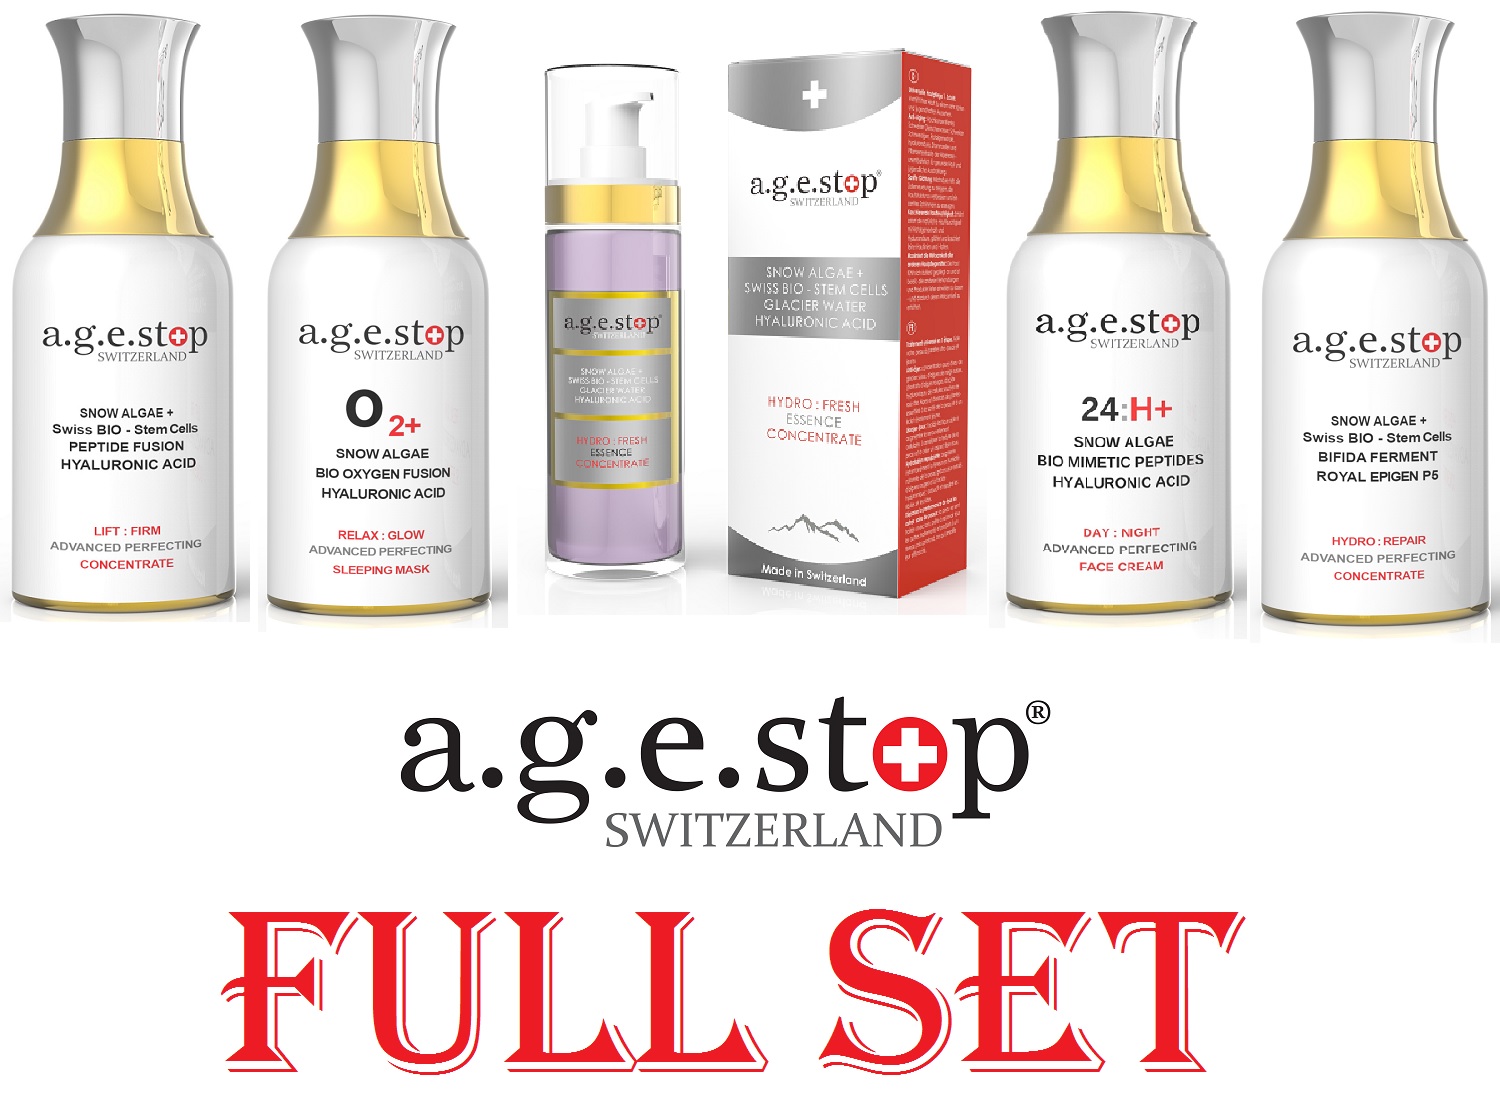 seon suisse anti aging)